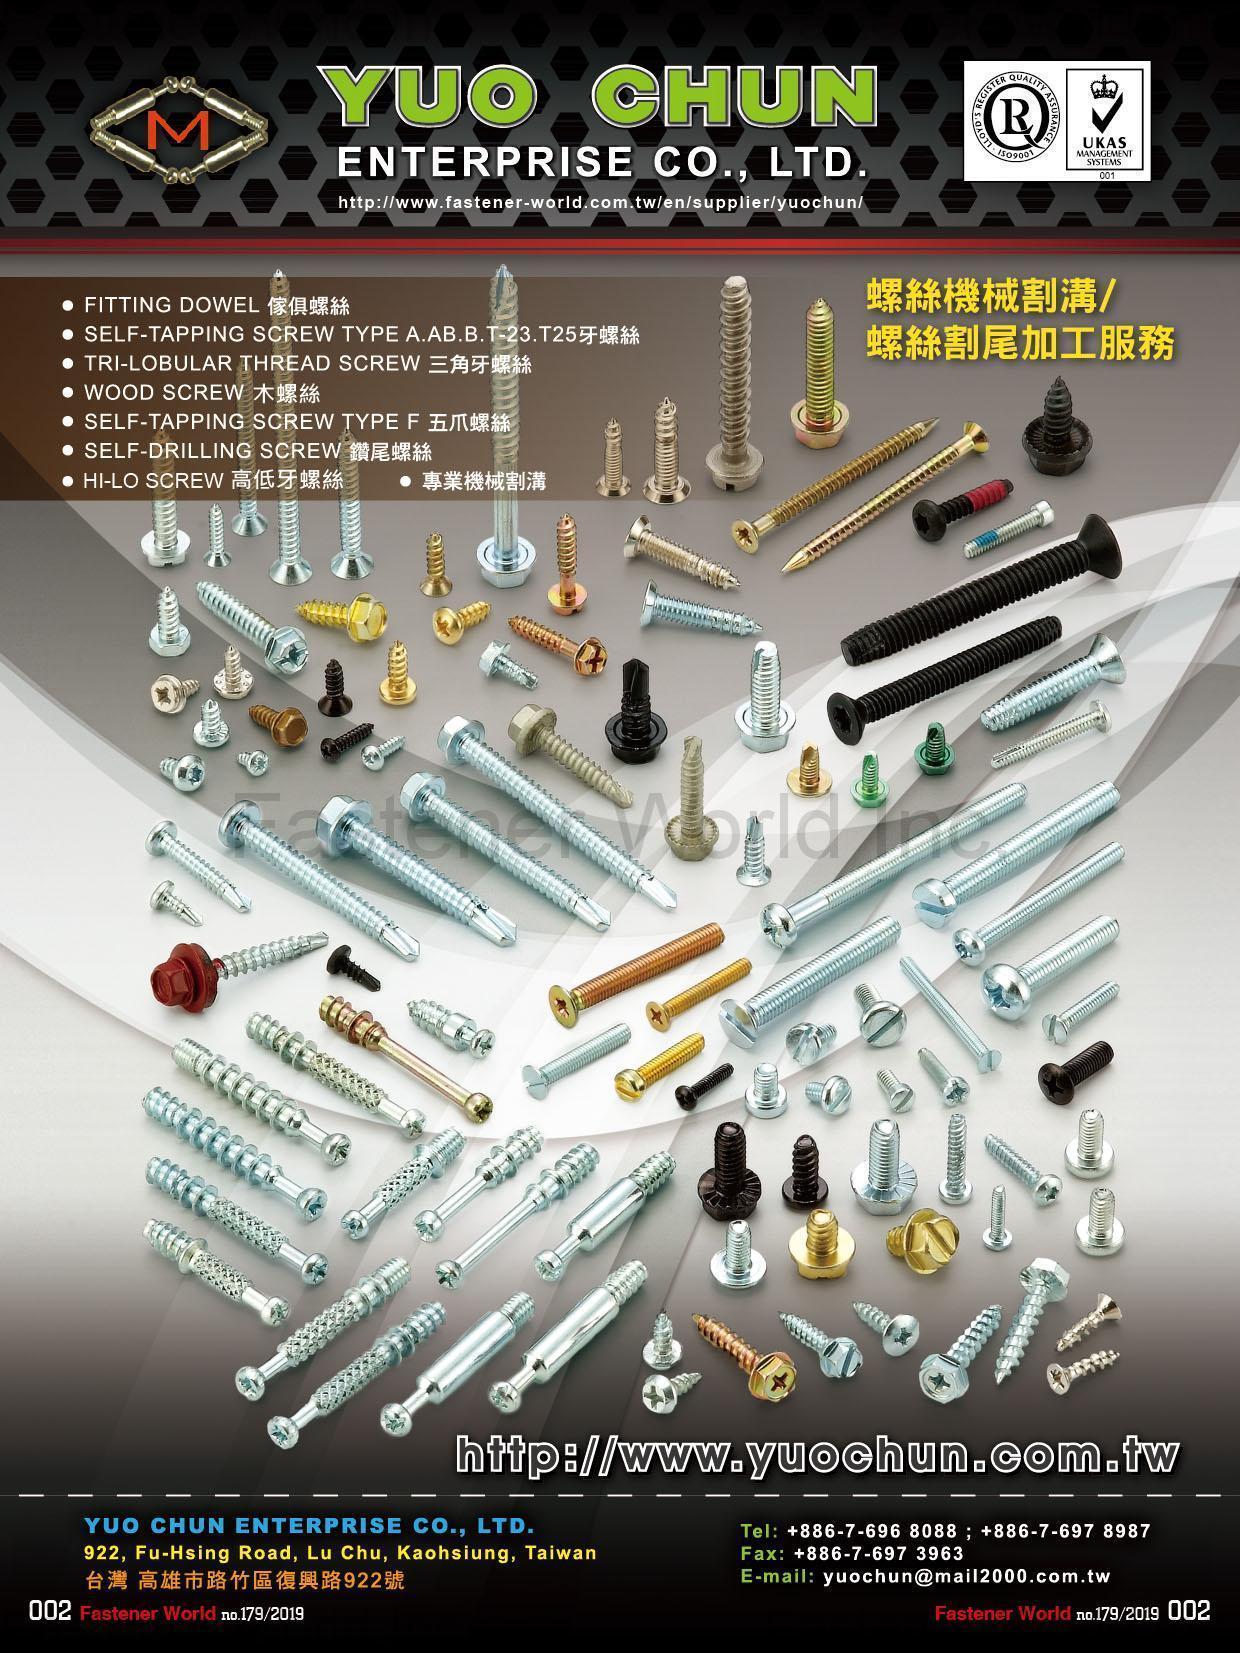 YUO CHUN ENTERPRISE CO., LTD.  , Fitting Dowel, Self-Tapping Screw, Tri-Lobular Thread Screw, Wood Screw, Self-Drilling Screw, HI-LO Screw , Furniture Fittings